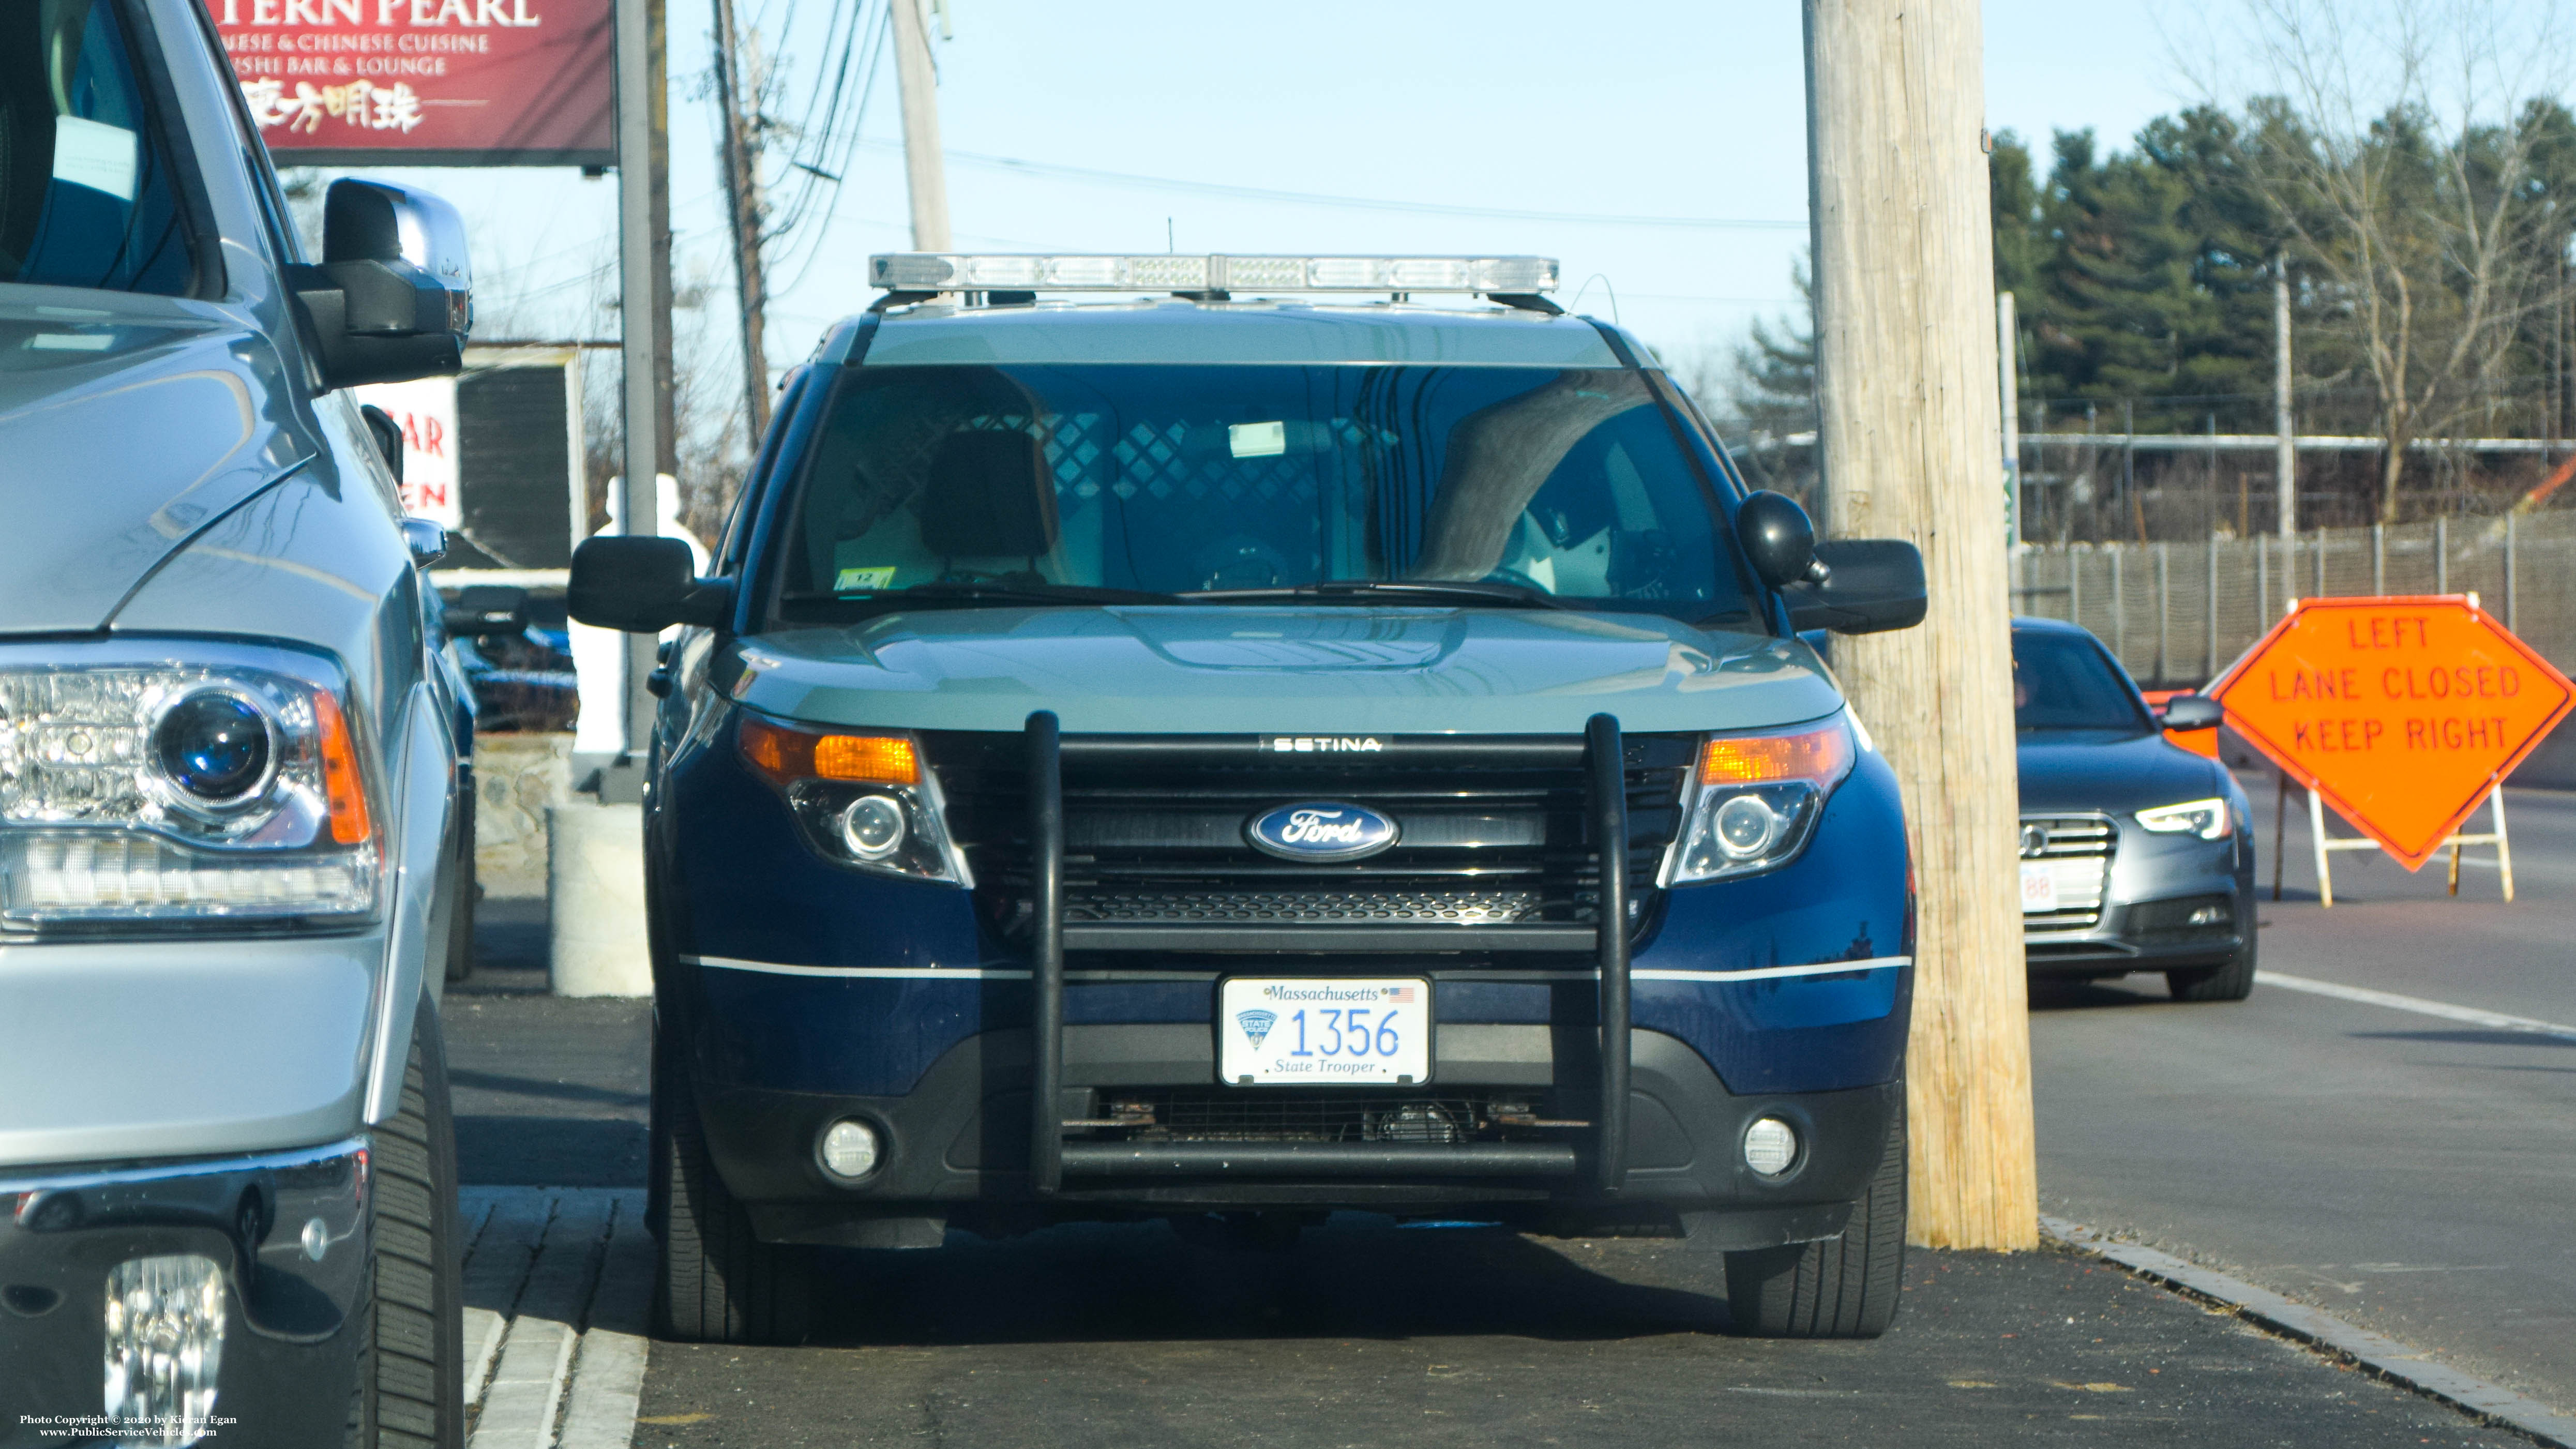 A photo  of Massachusetts State Police
            Cruiser 1356, a 2015 Ford Police Interceptor Utility             taken by Kieran Egan